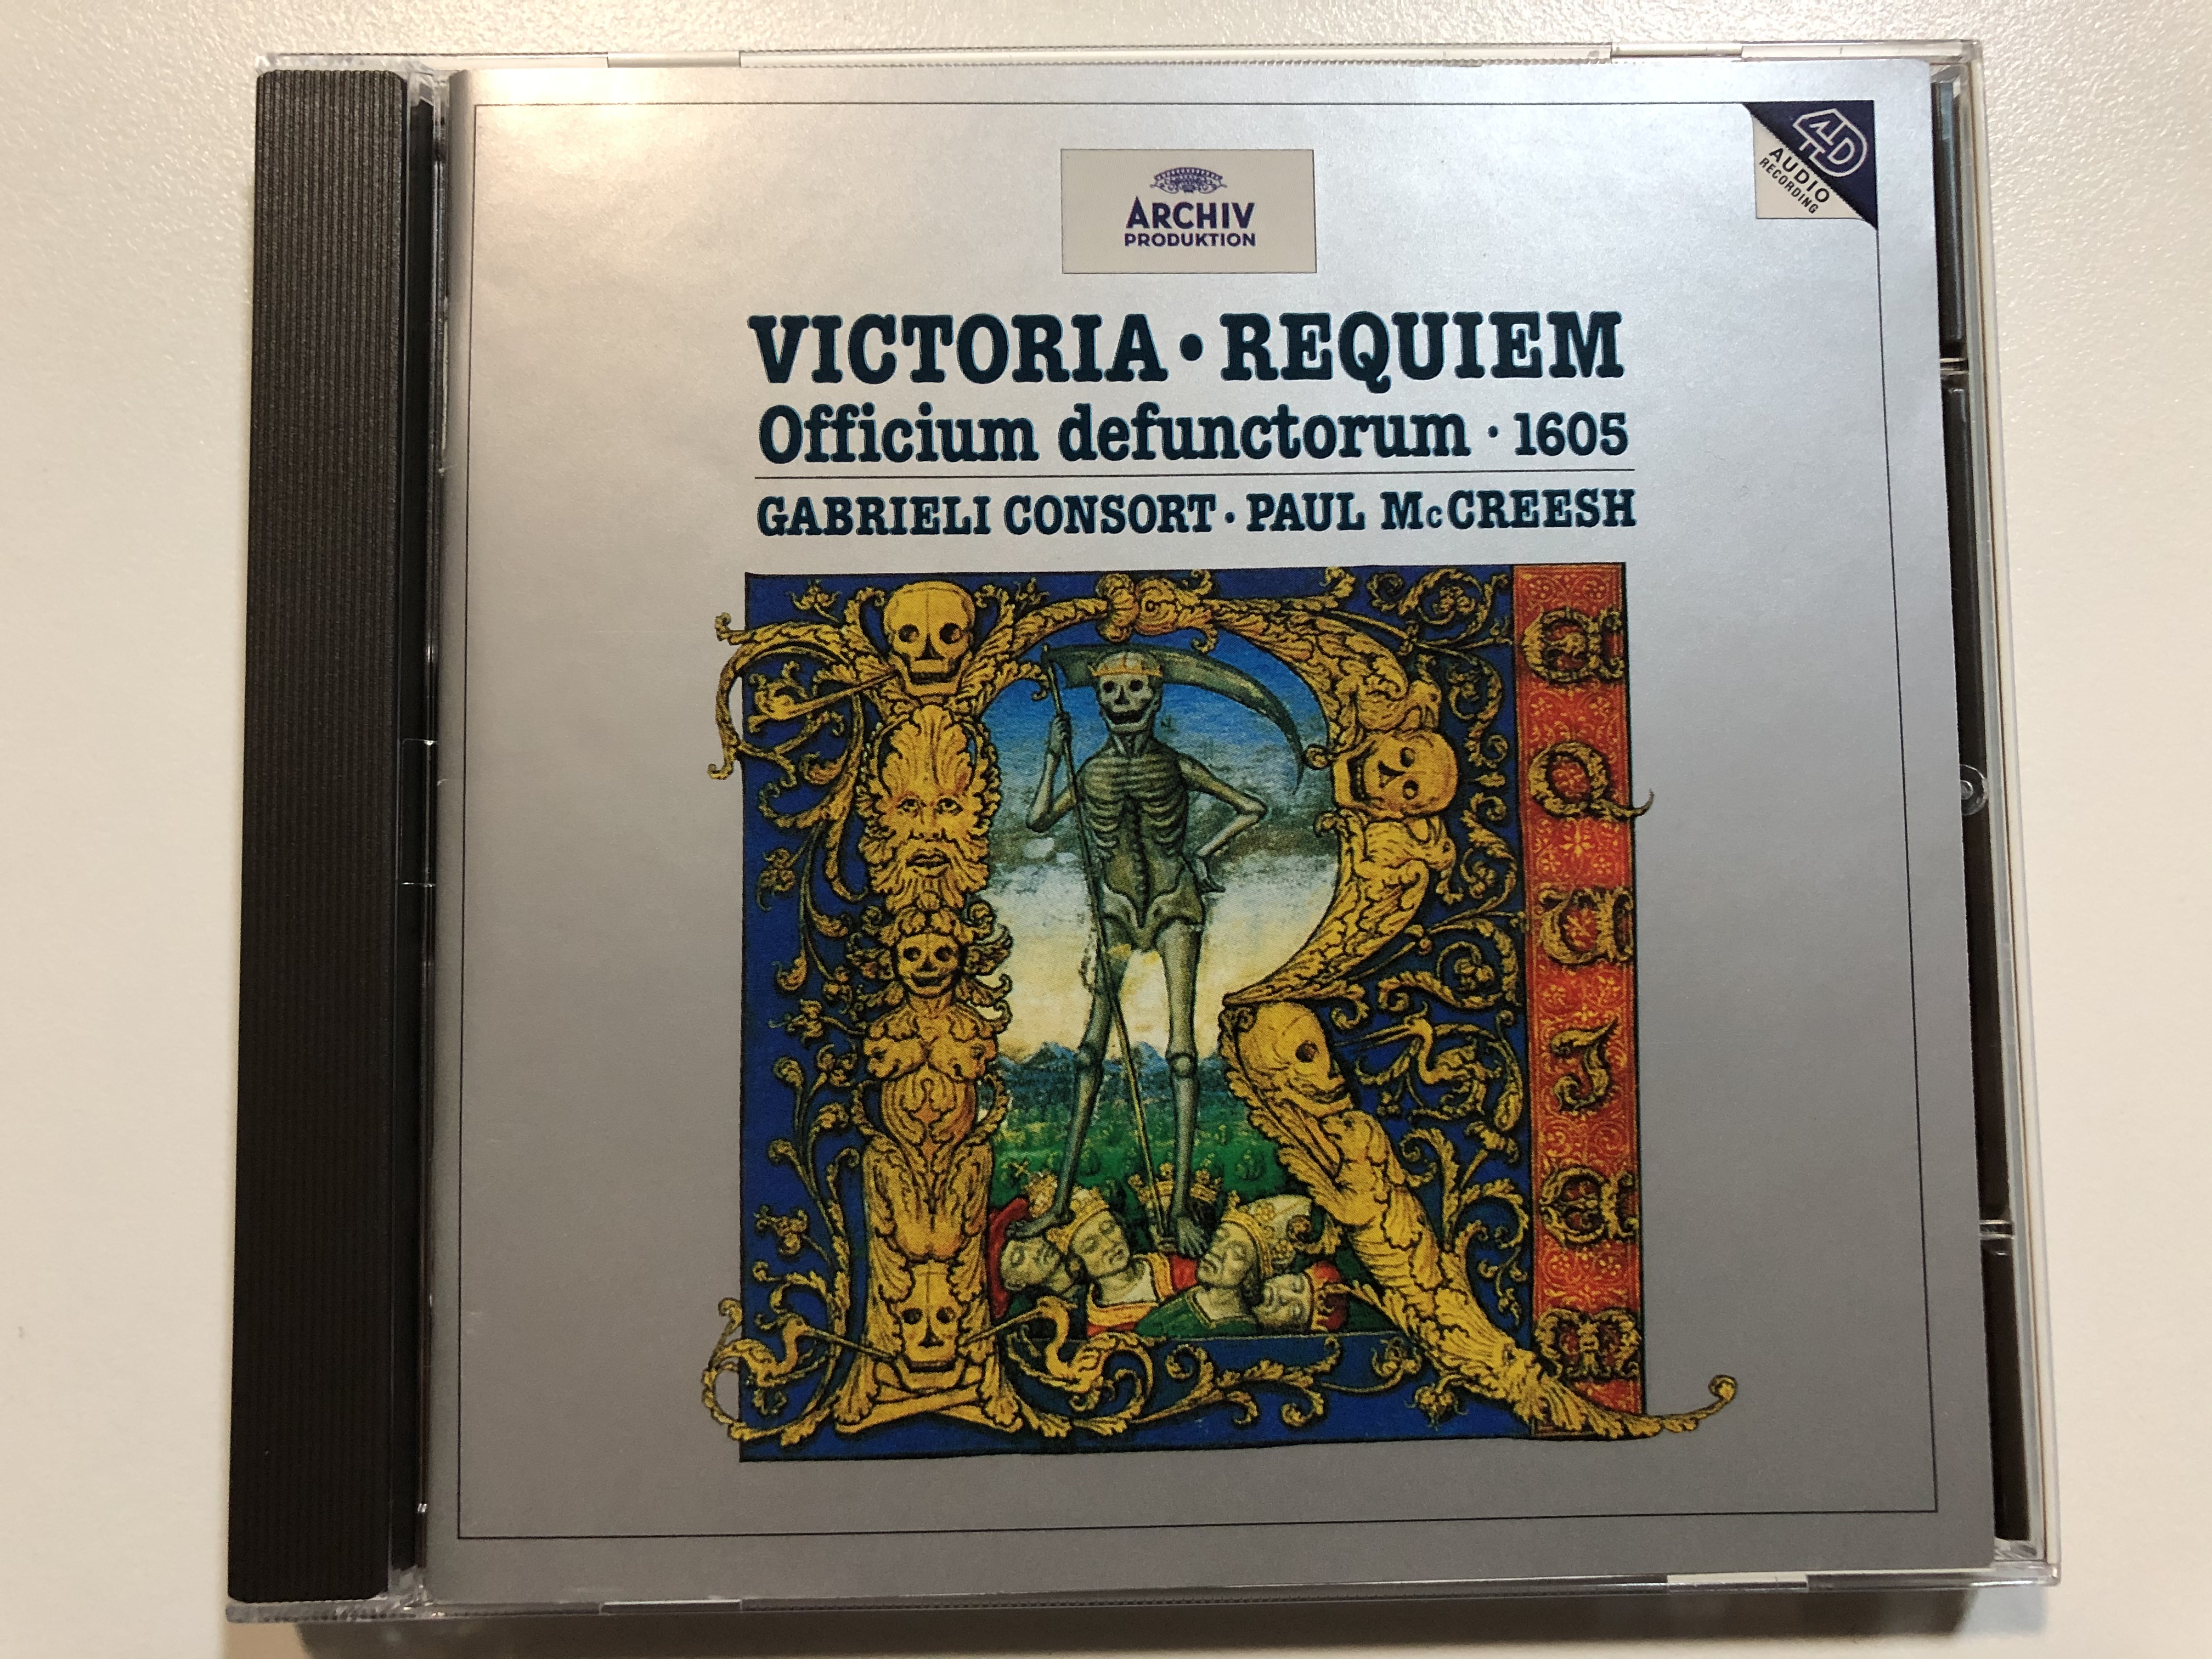 victoria-requiem-officium-defunctorum-1605-gabrieli-consort-paul-mccreesh-archiv-produktion-audio-cd-1995-stereo-447-095-2-1-.jpg